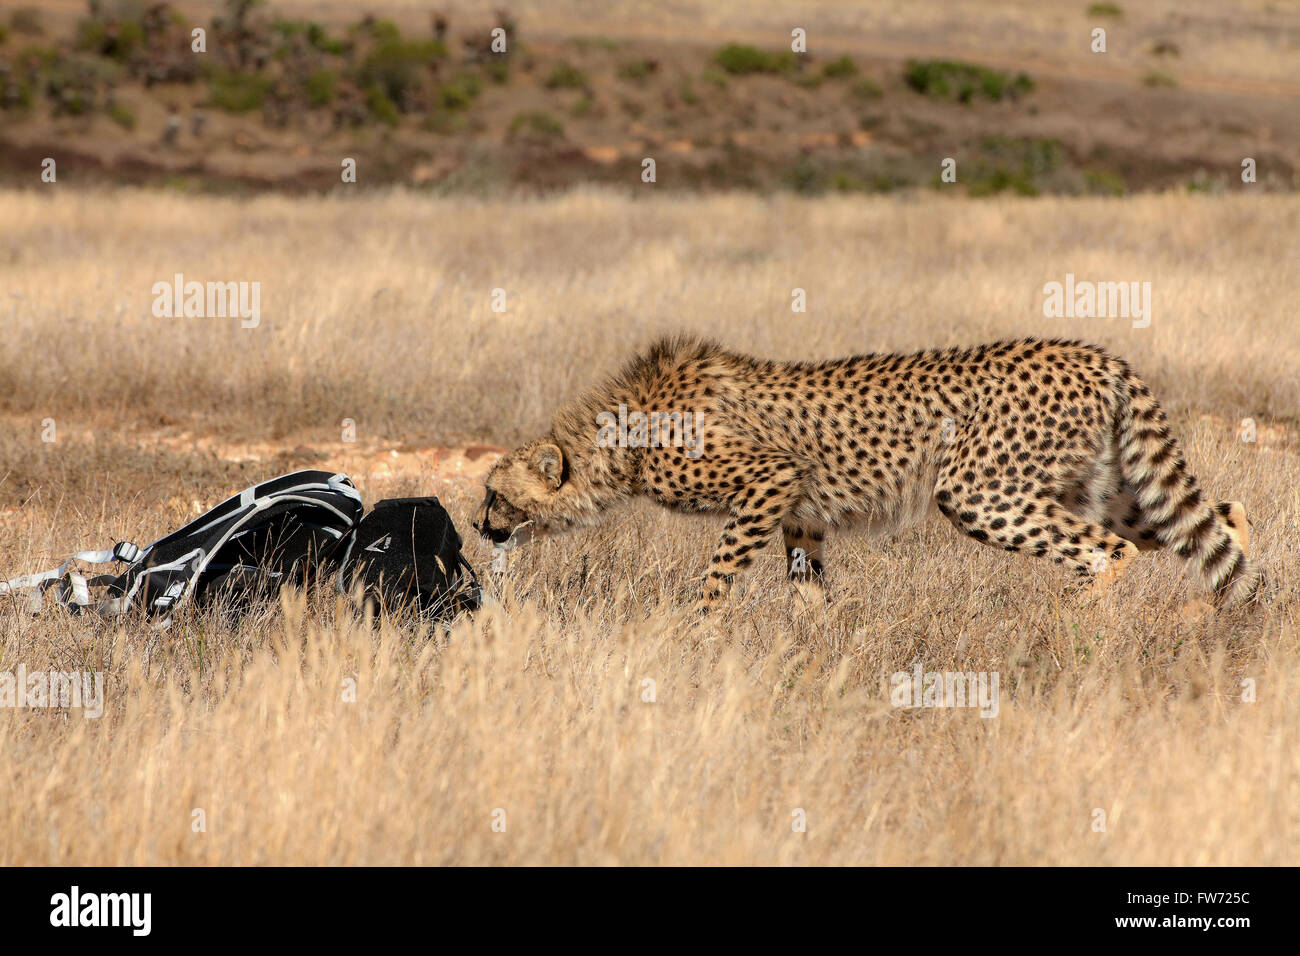 A curious cheetah investigating a tourists rucksack Stock Photo